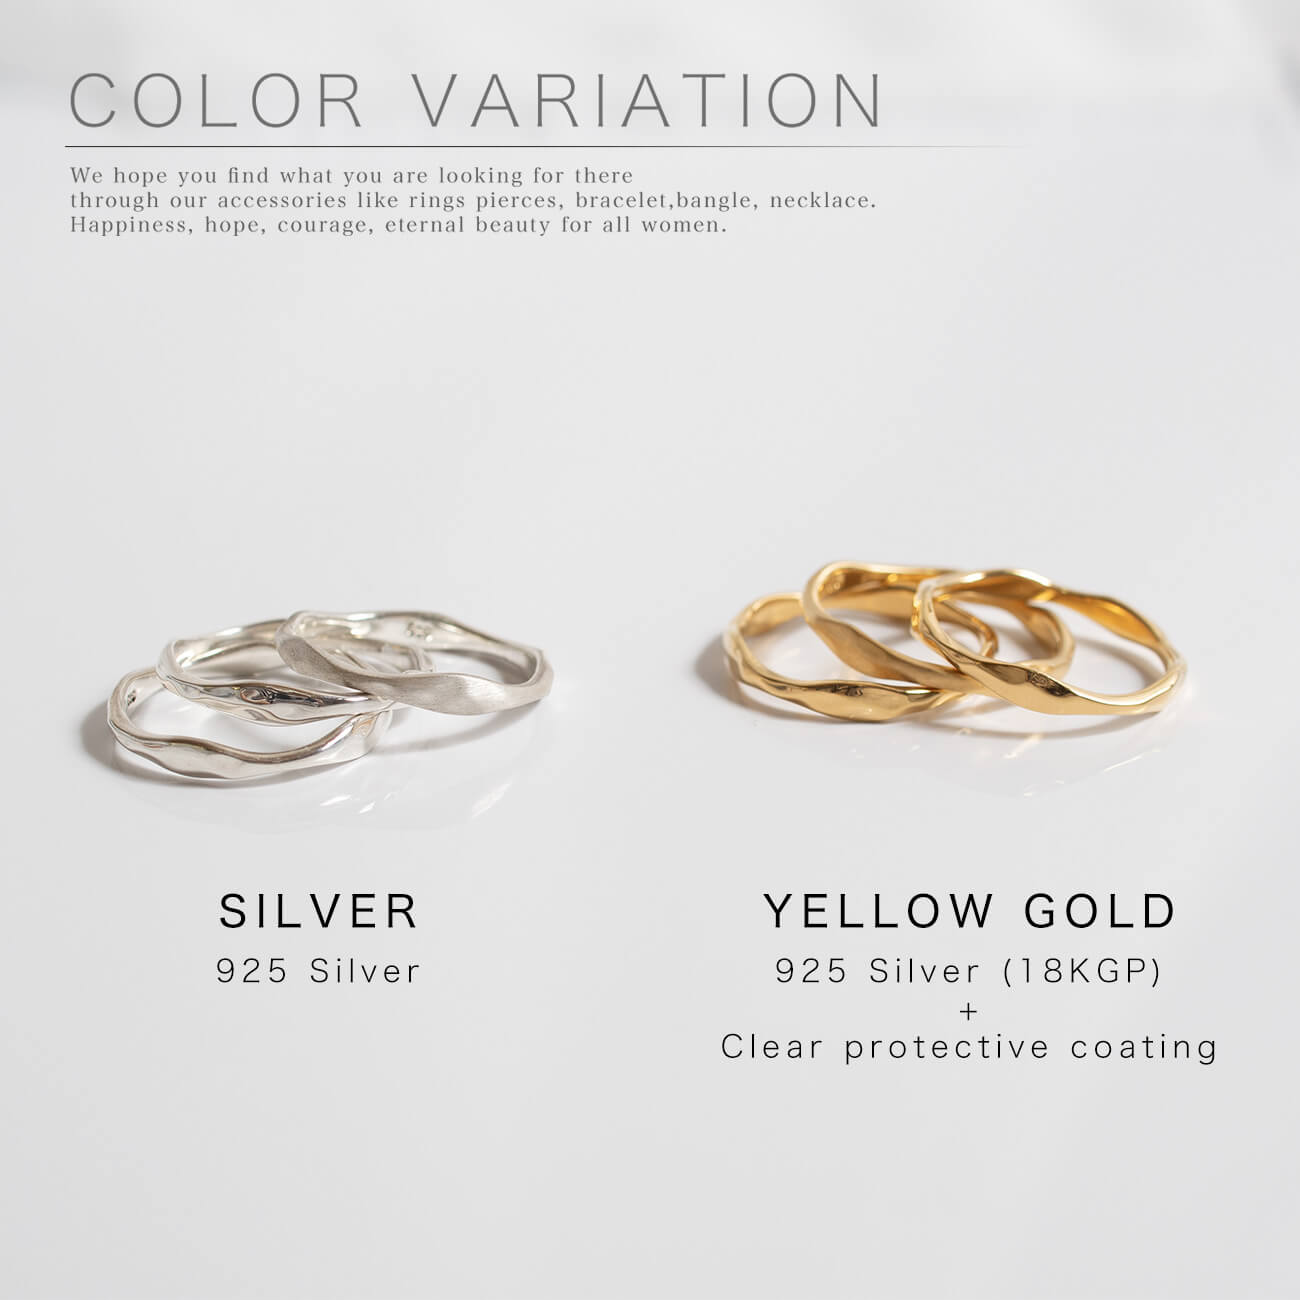 Silver925 3 Layerd Wavy Ring | MERV